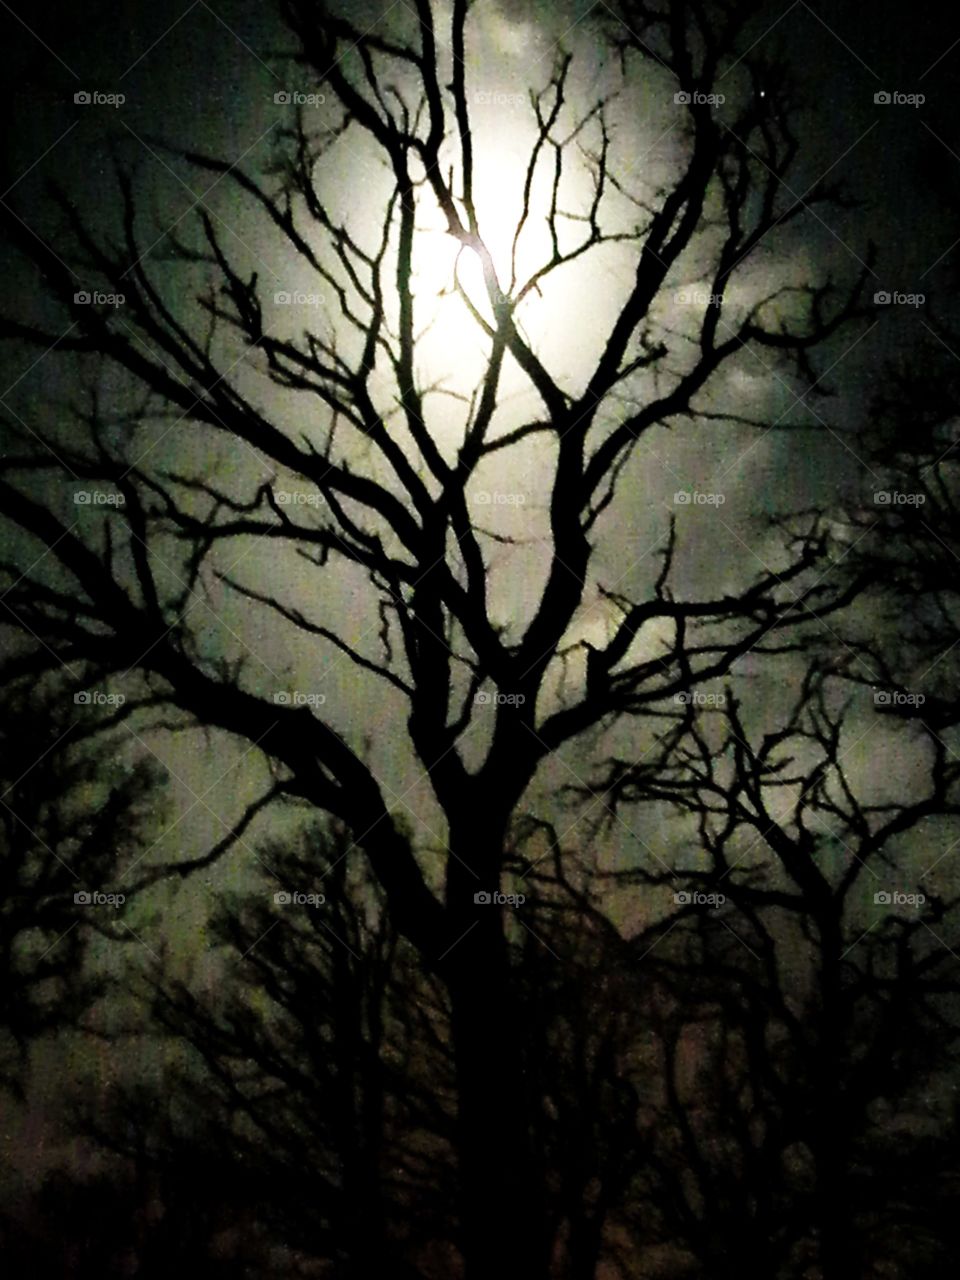 Winter night, moon is bright